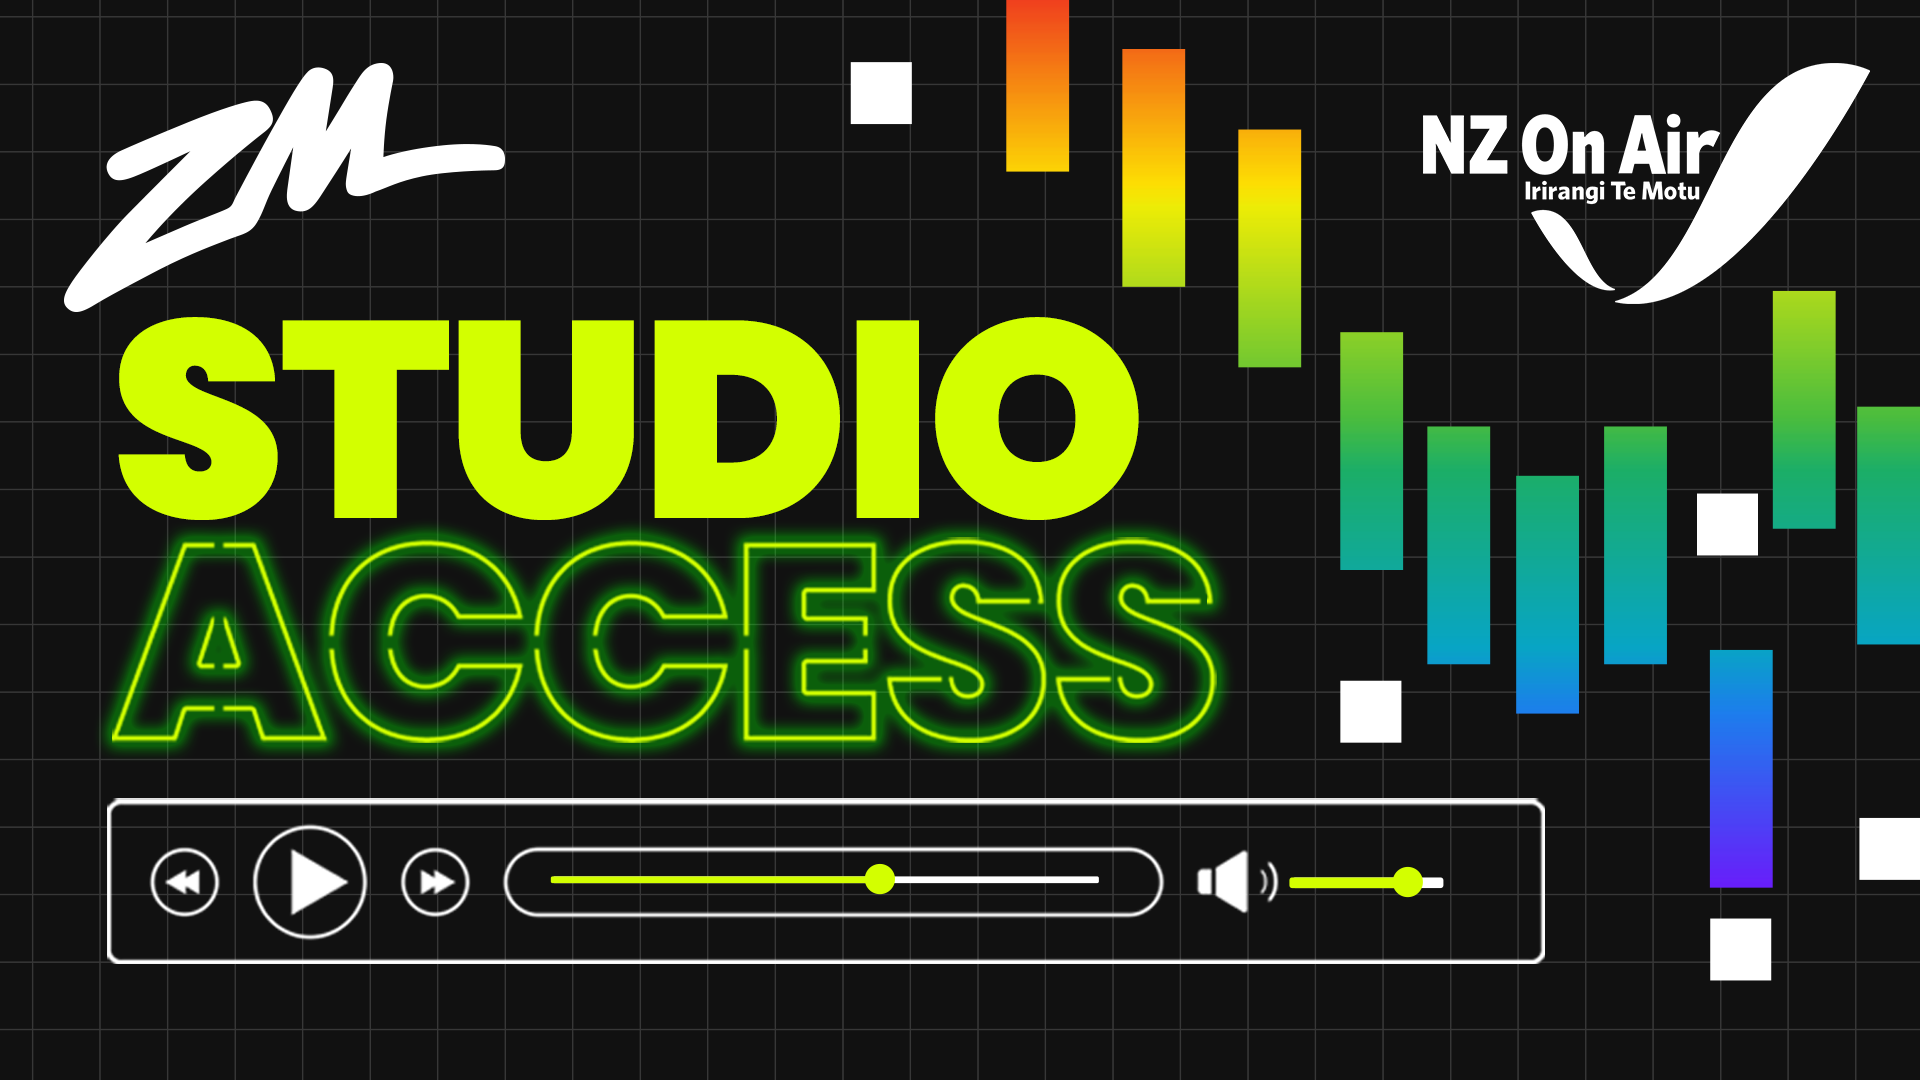 ZM's Studio Access